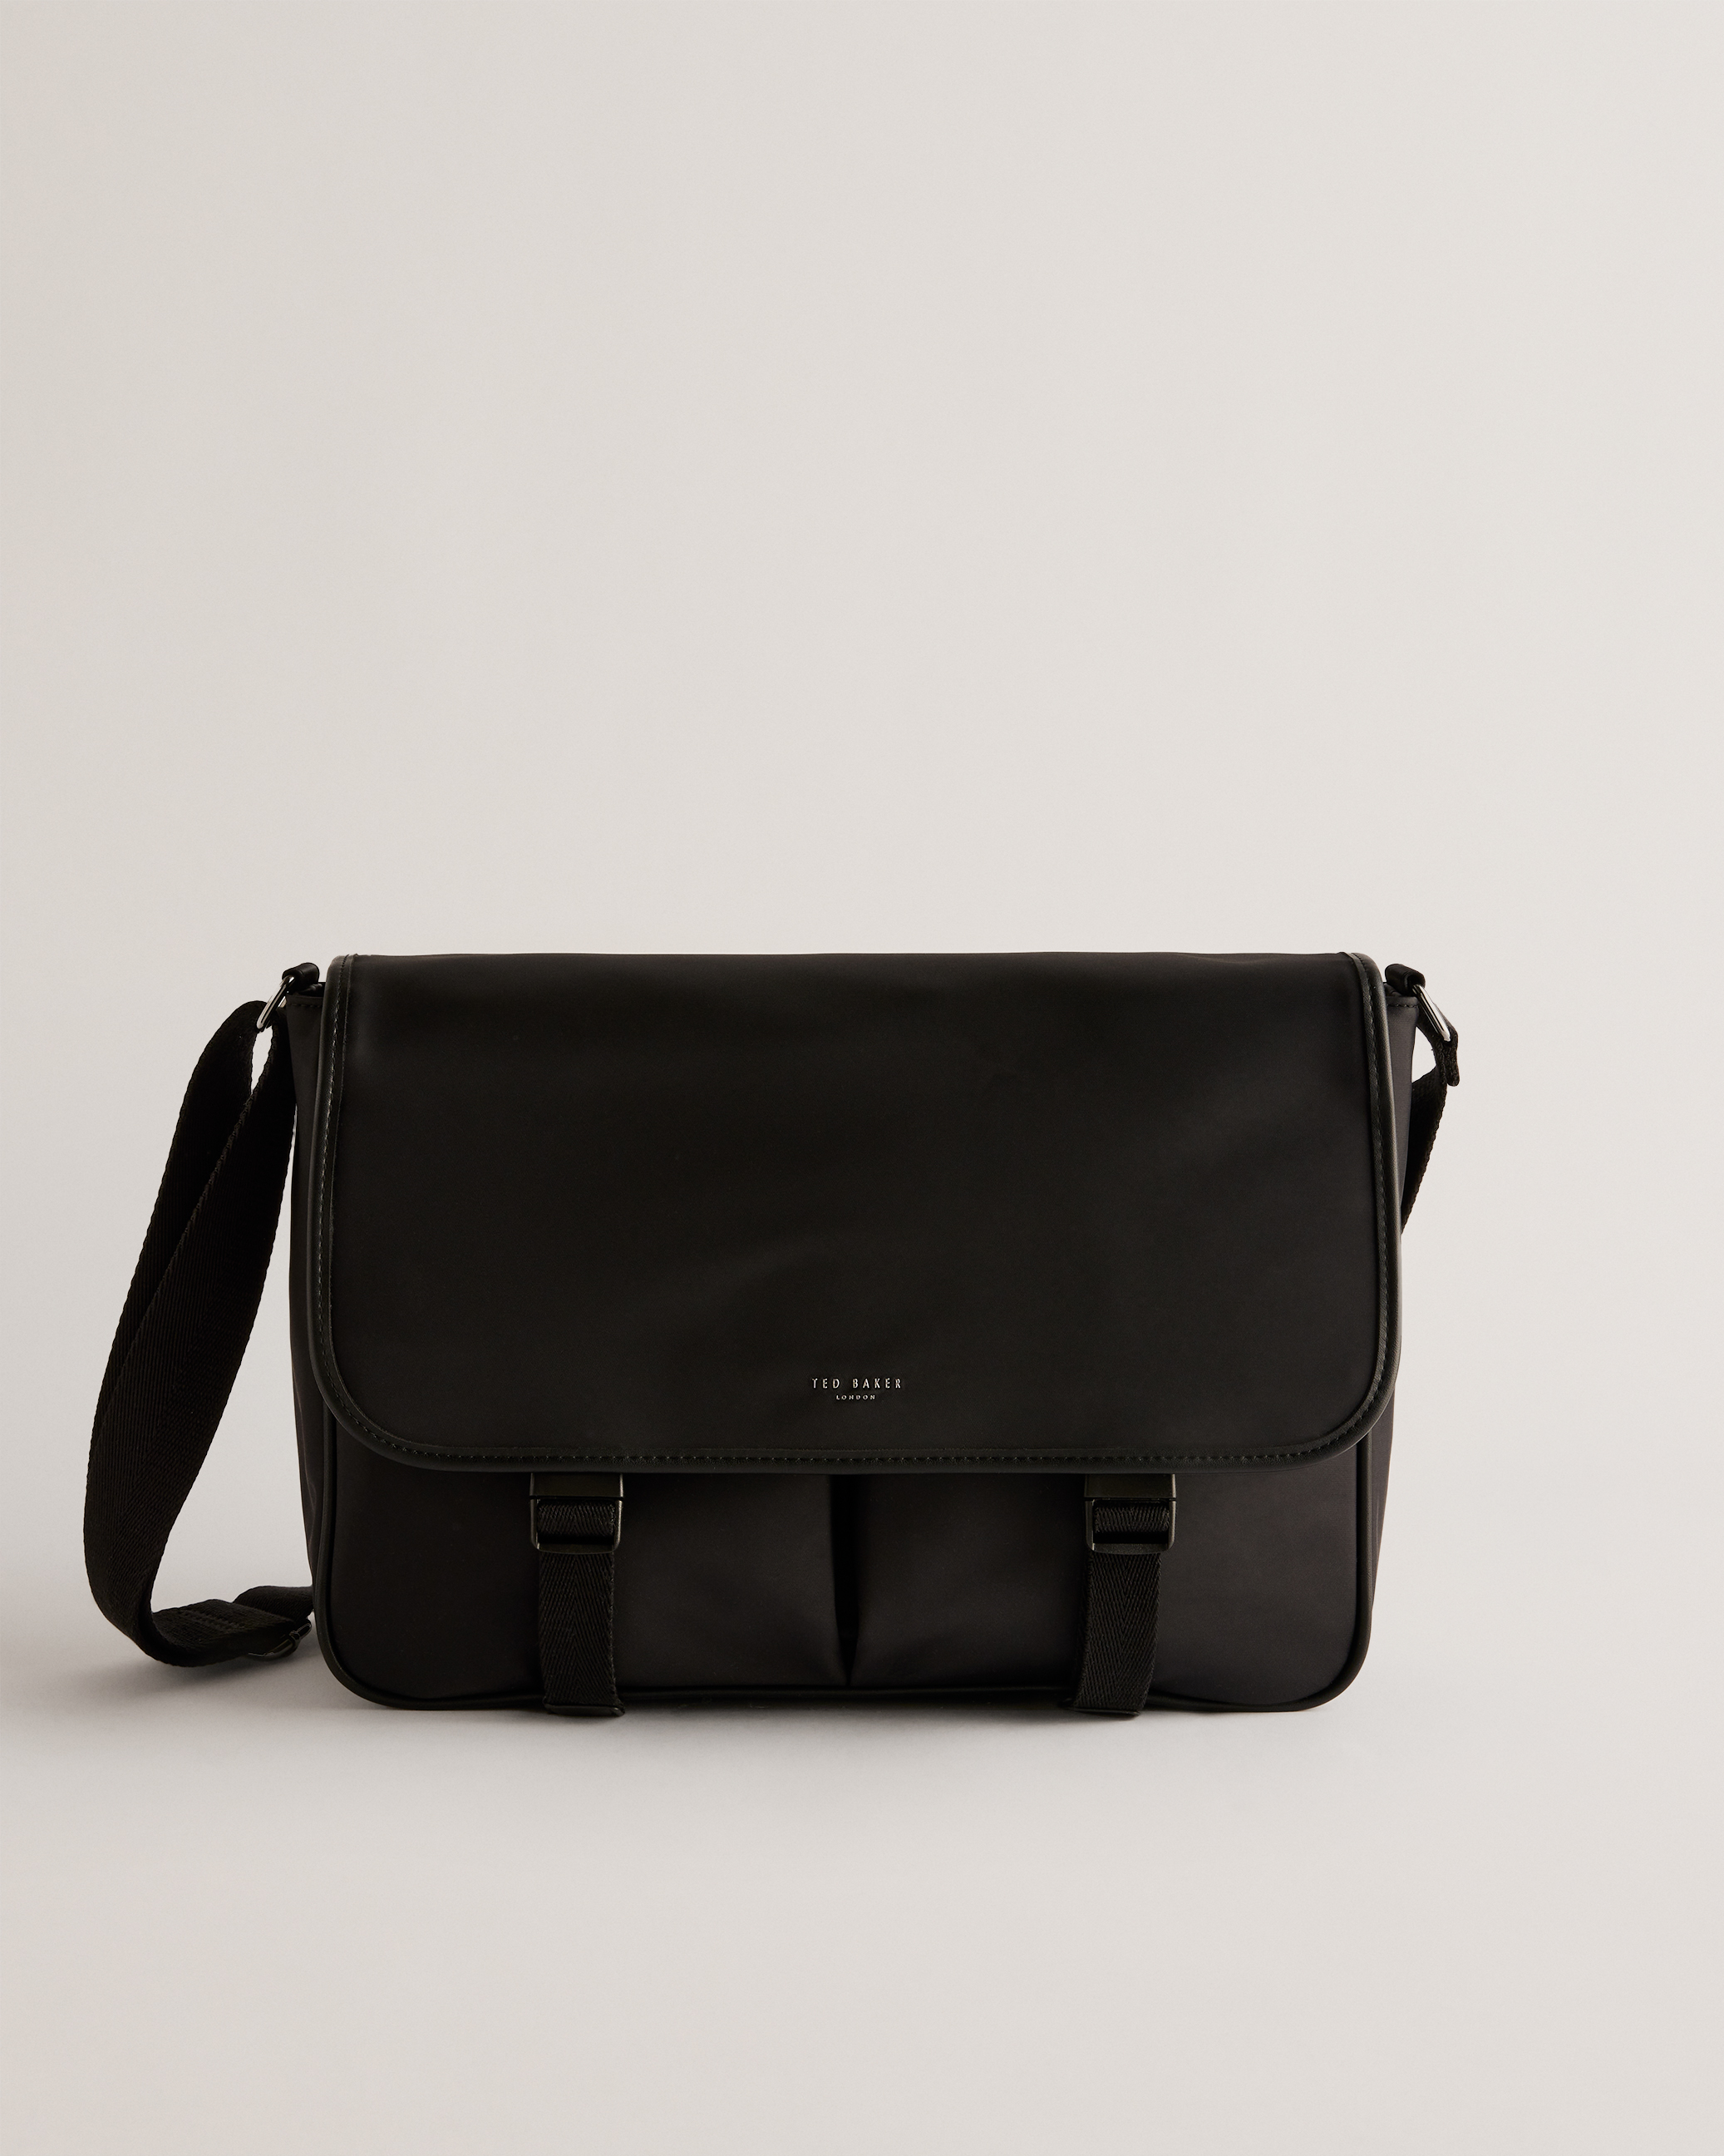  Ted Baker London MATTS Nylon Messenger Bag, Black : Clothing,  Shoes & Jewelry